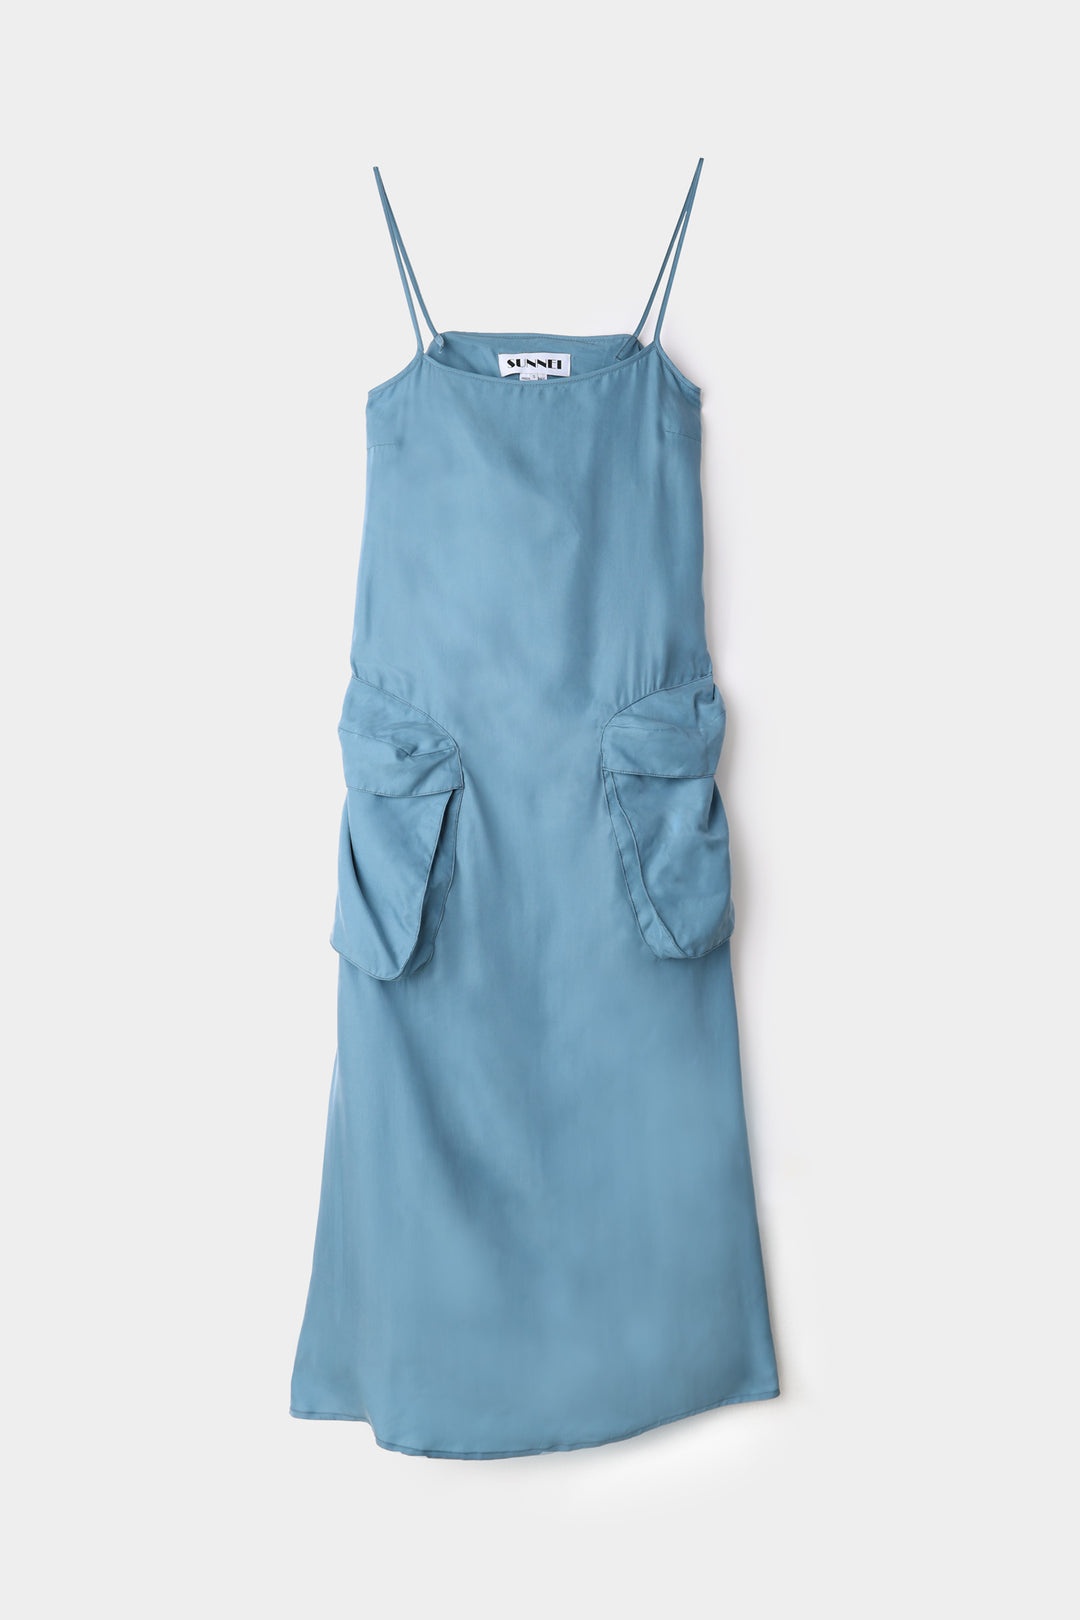 STRAP DRESS / slate blue - 1